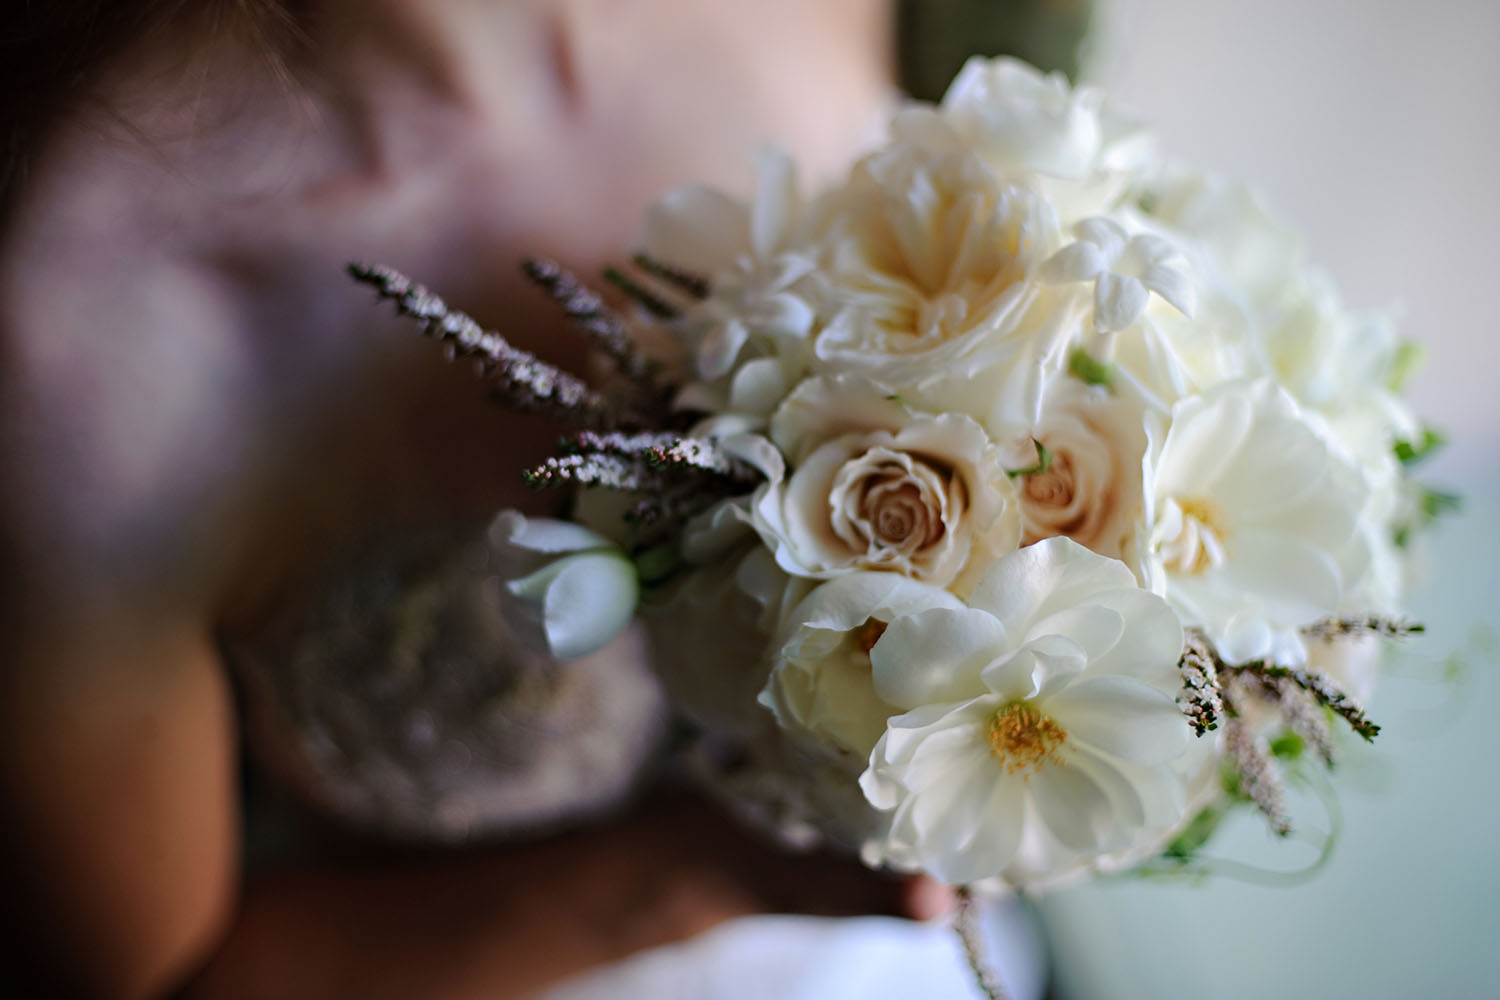   Ryan Estes Photography &nbsp; | &nbsp;Wedding Reception &nbsp;| &nbsp;Appleford Estate, Villanova, PA 